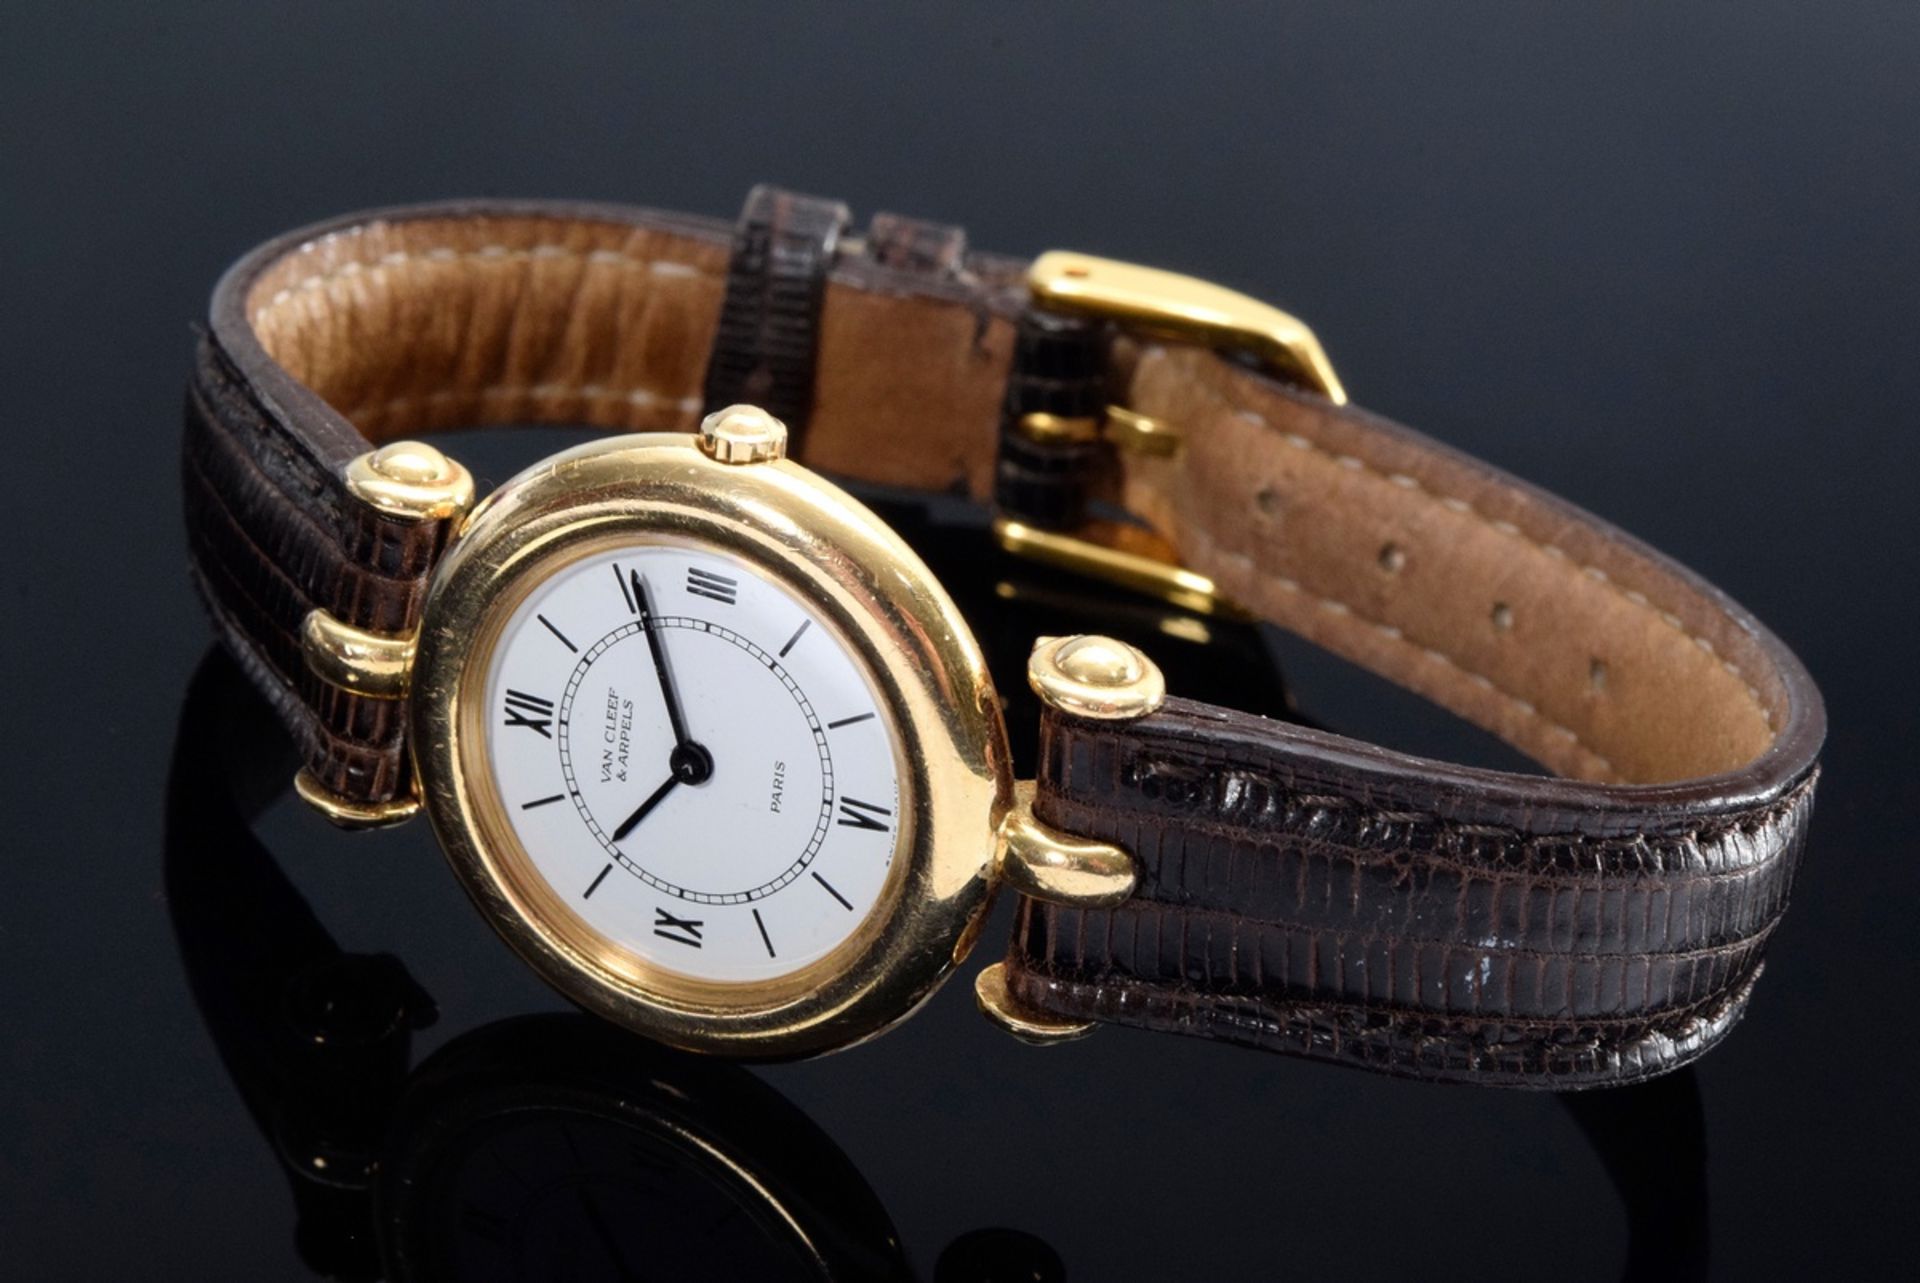 Van Cleef & Arpels GG 750 "Fantasy" wristwatch, quartz movement, sapphire crystal, white dial with 